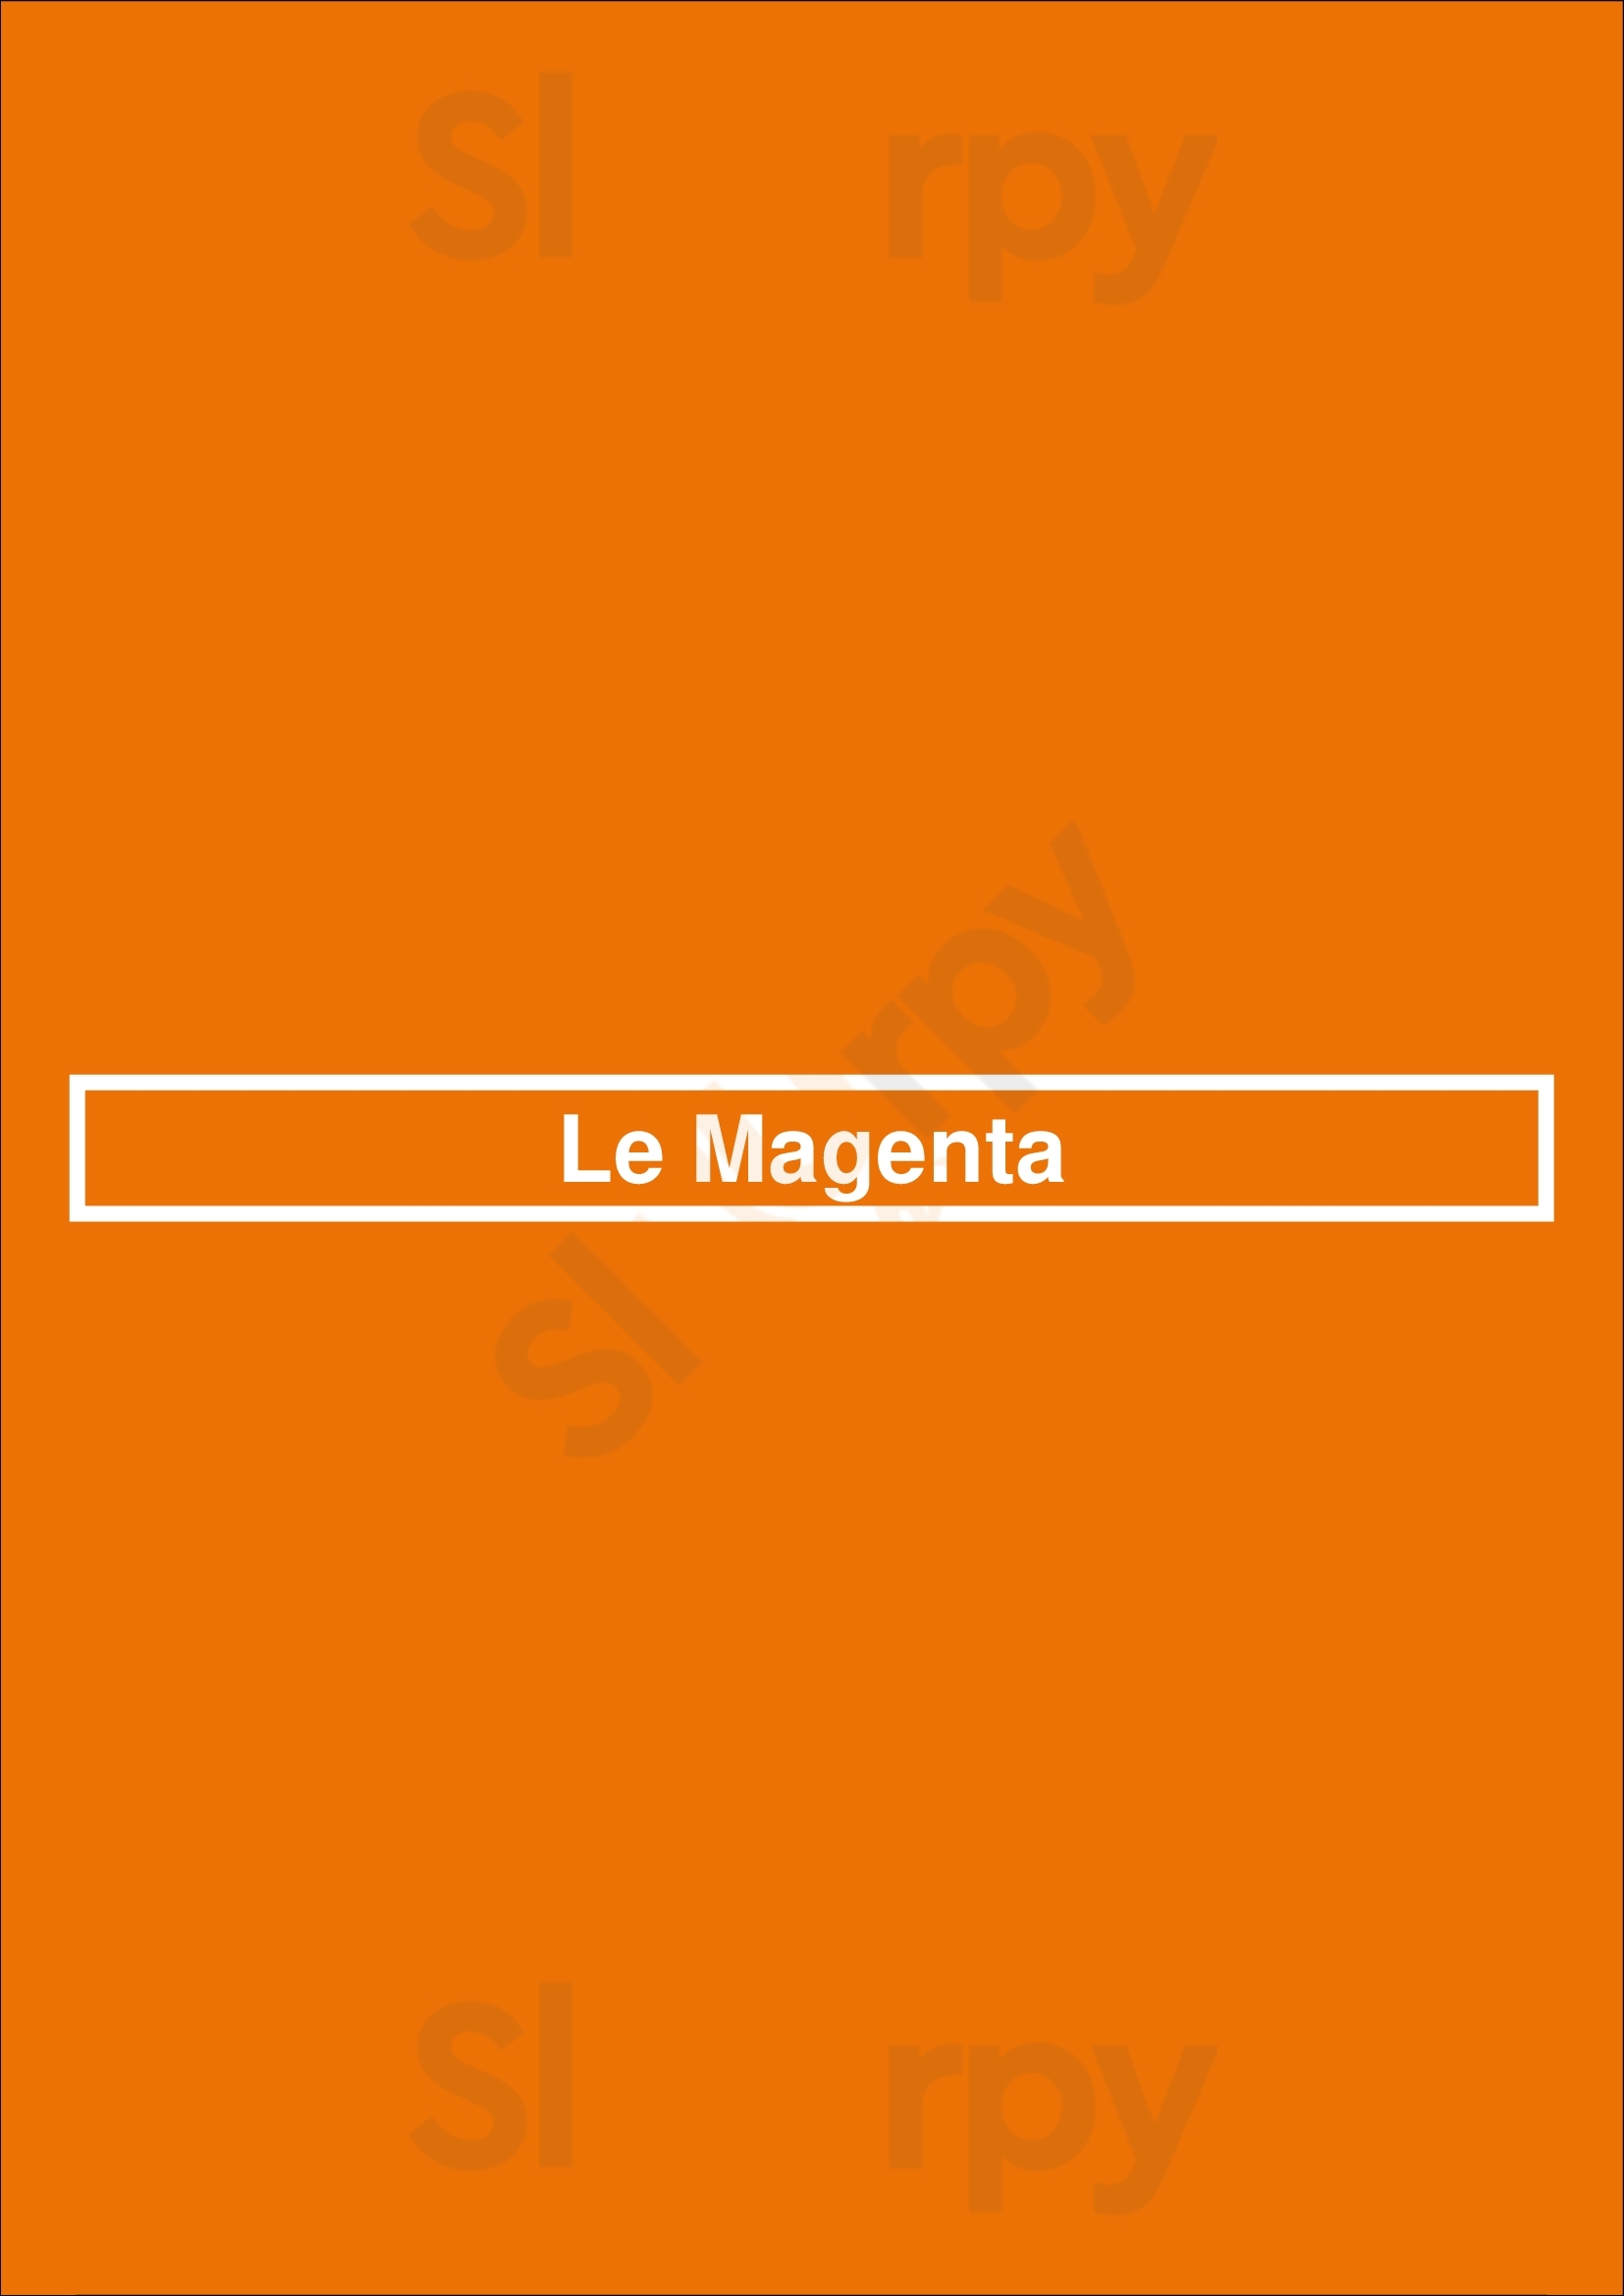 Le Magenta Paris Menu - 1